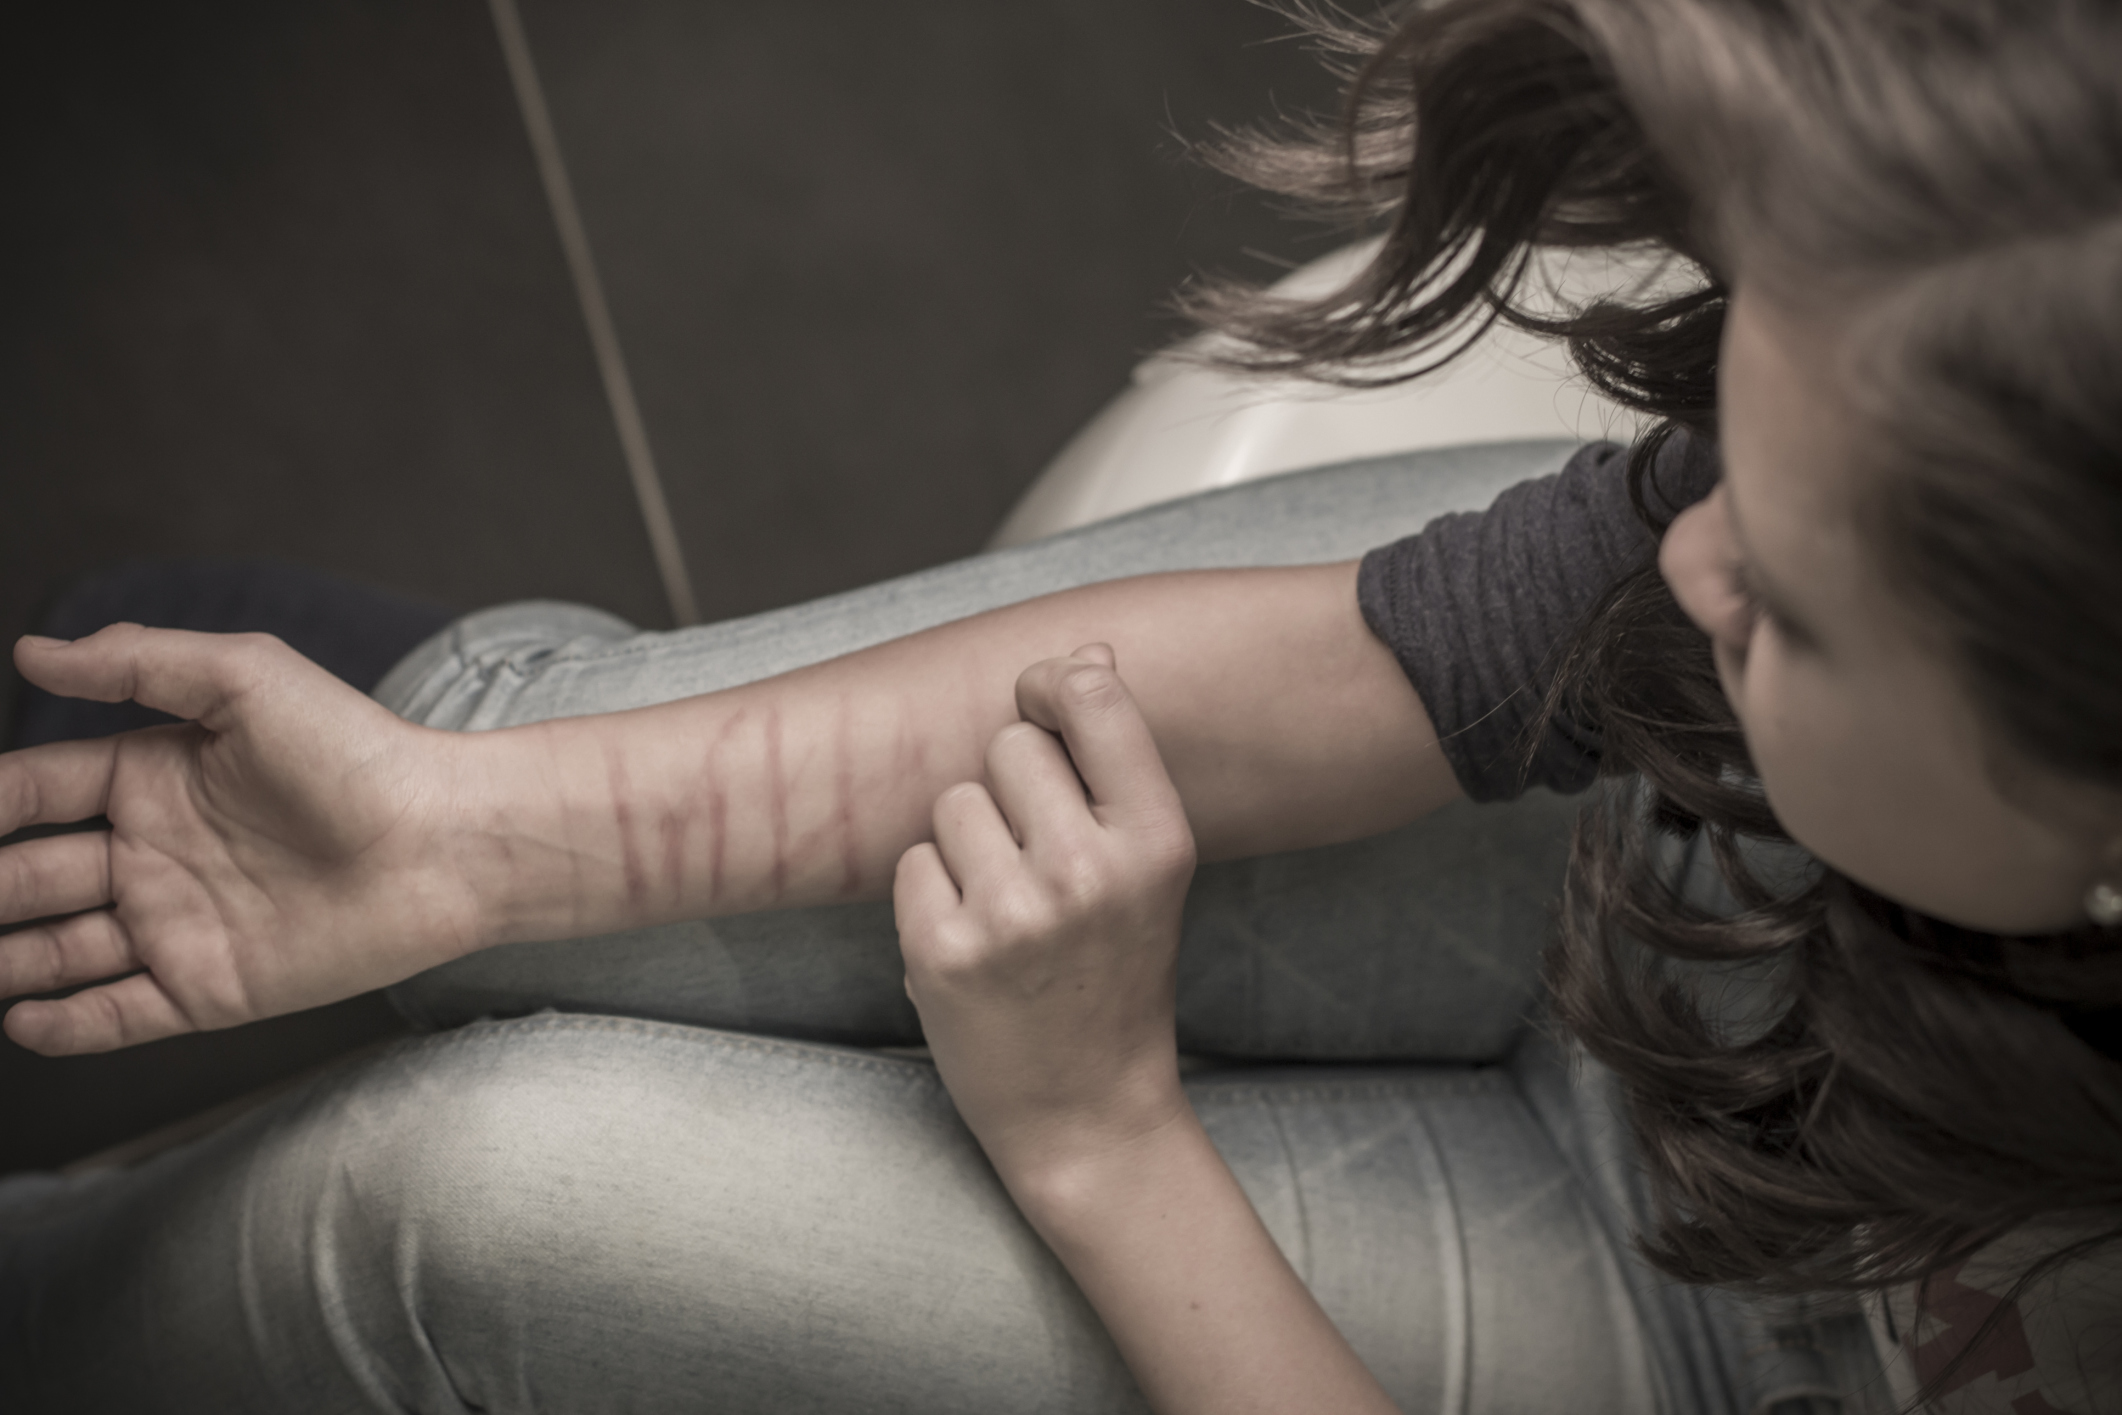 teens cutting self mutilation